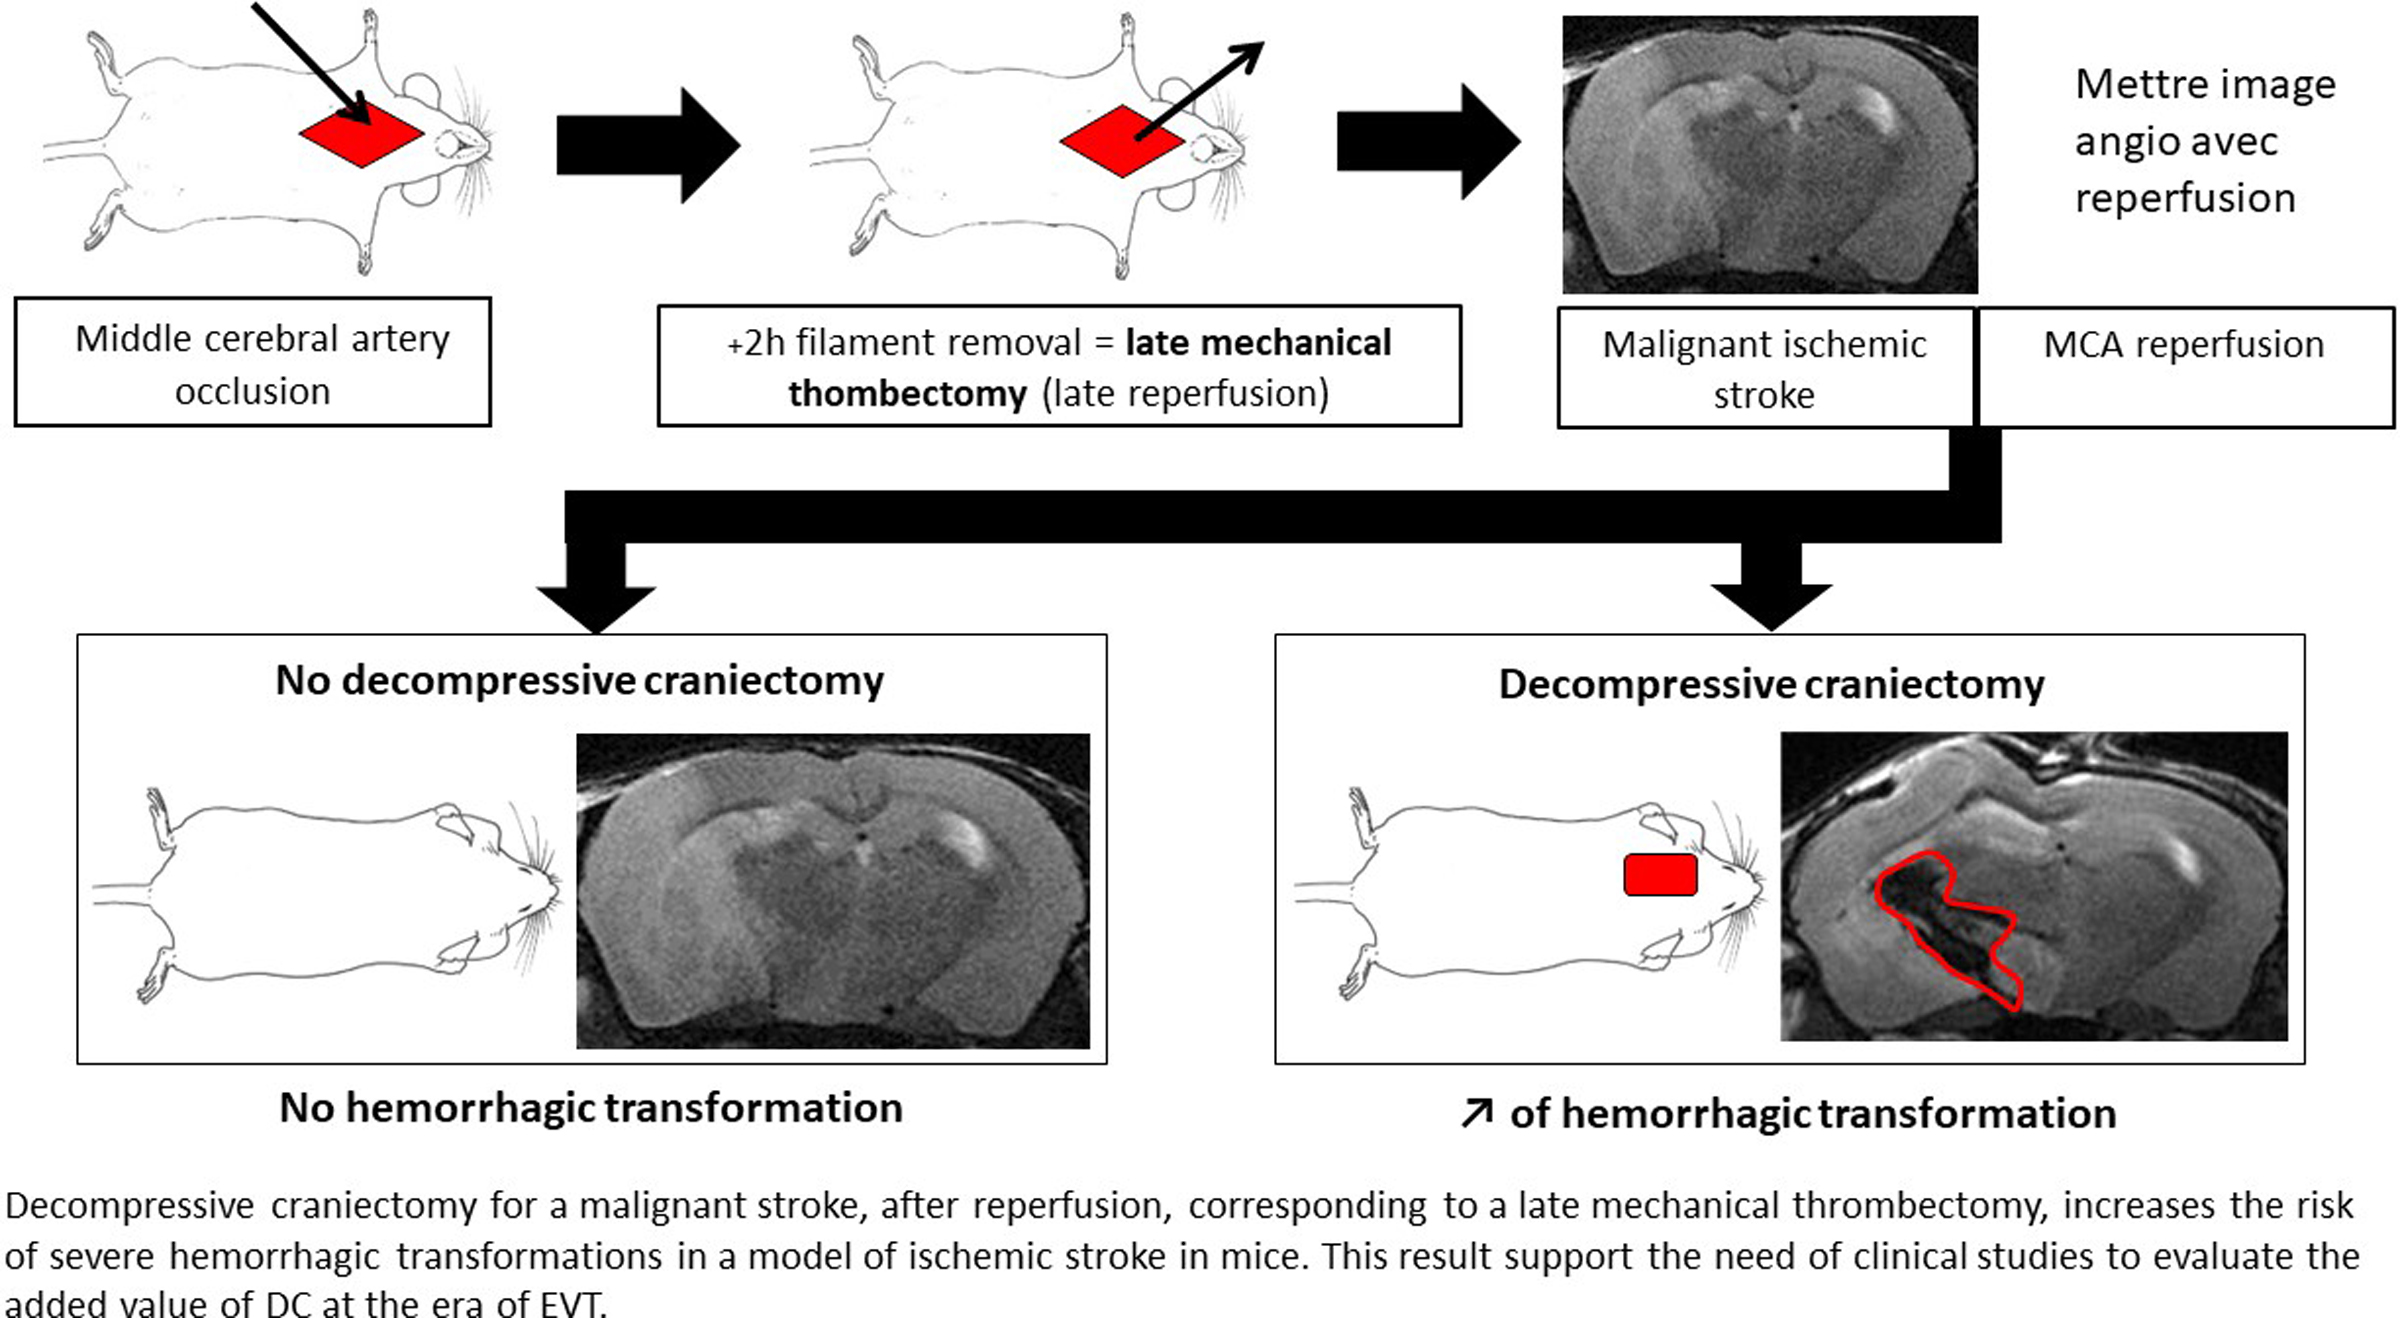 Impact of Decompressive Craniectomy on Hemorrhagic Transformation in Malignant Ischemic Stroke in Mice